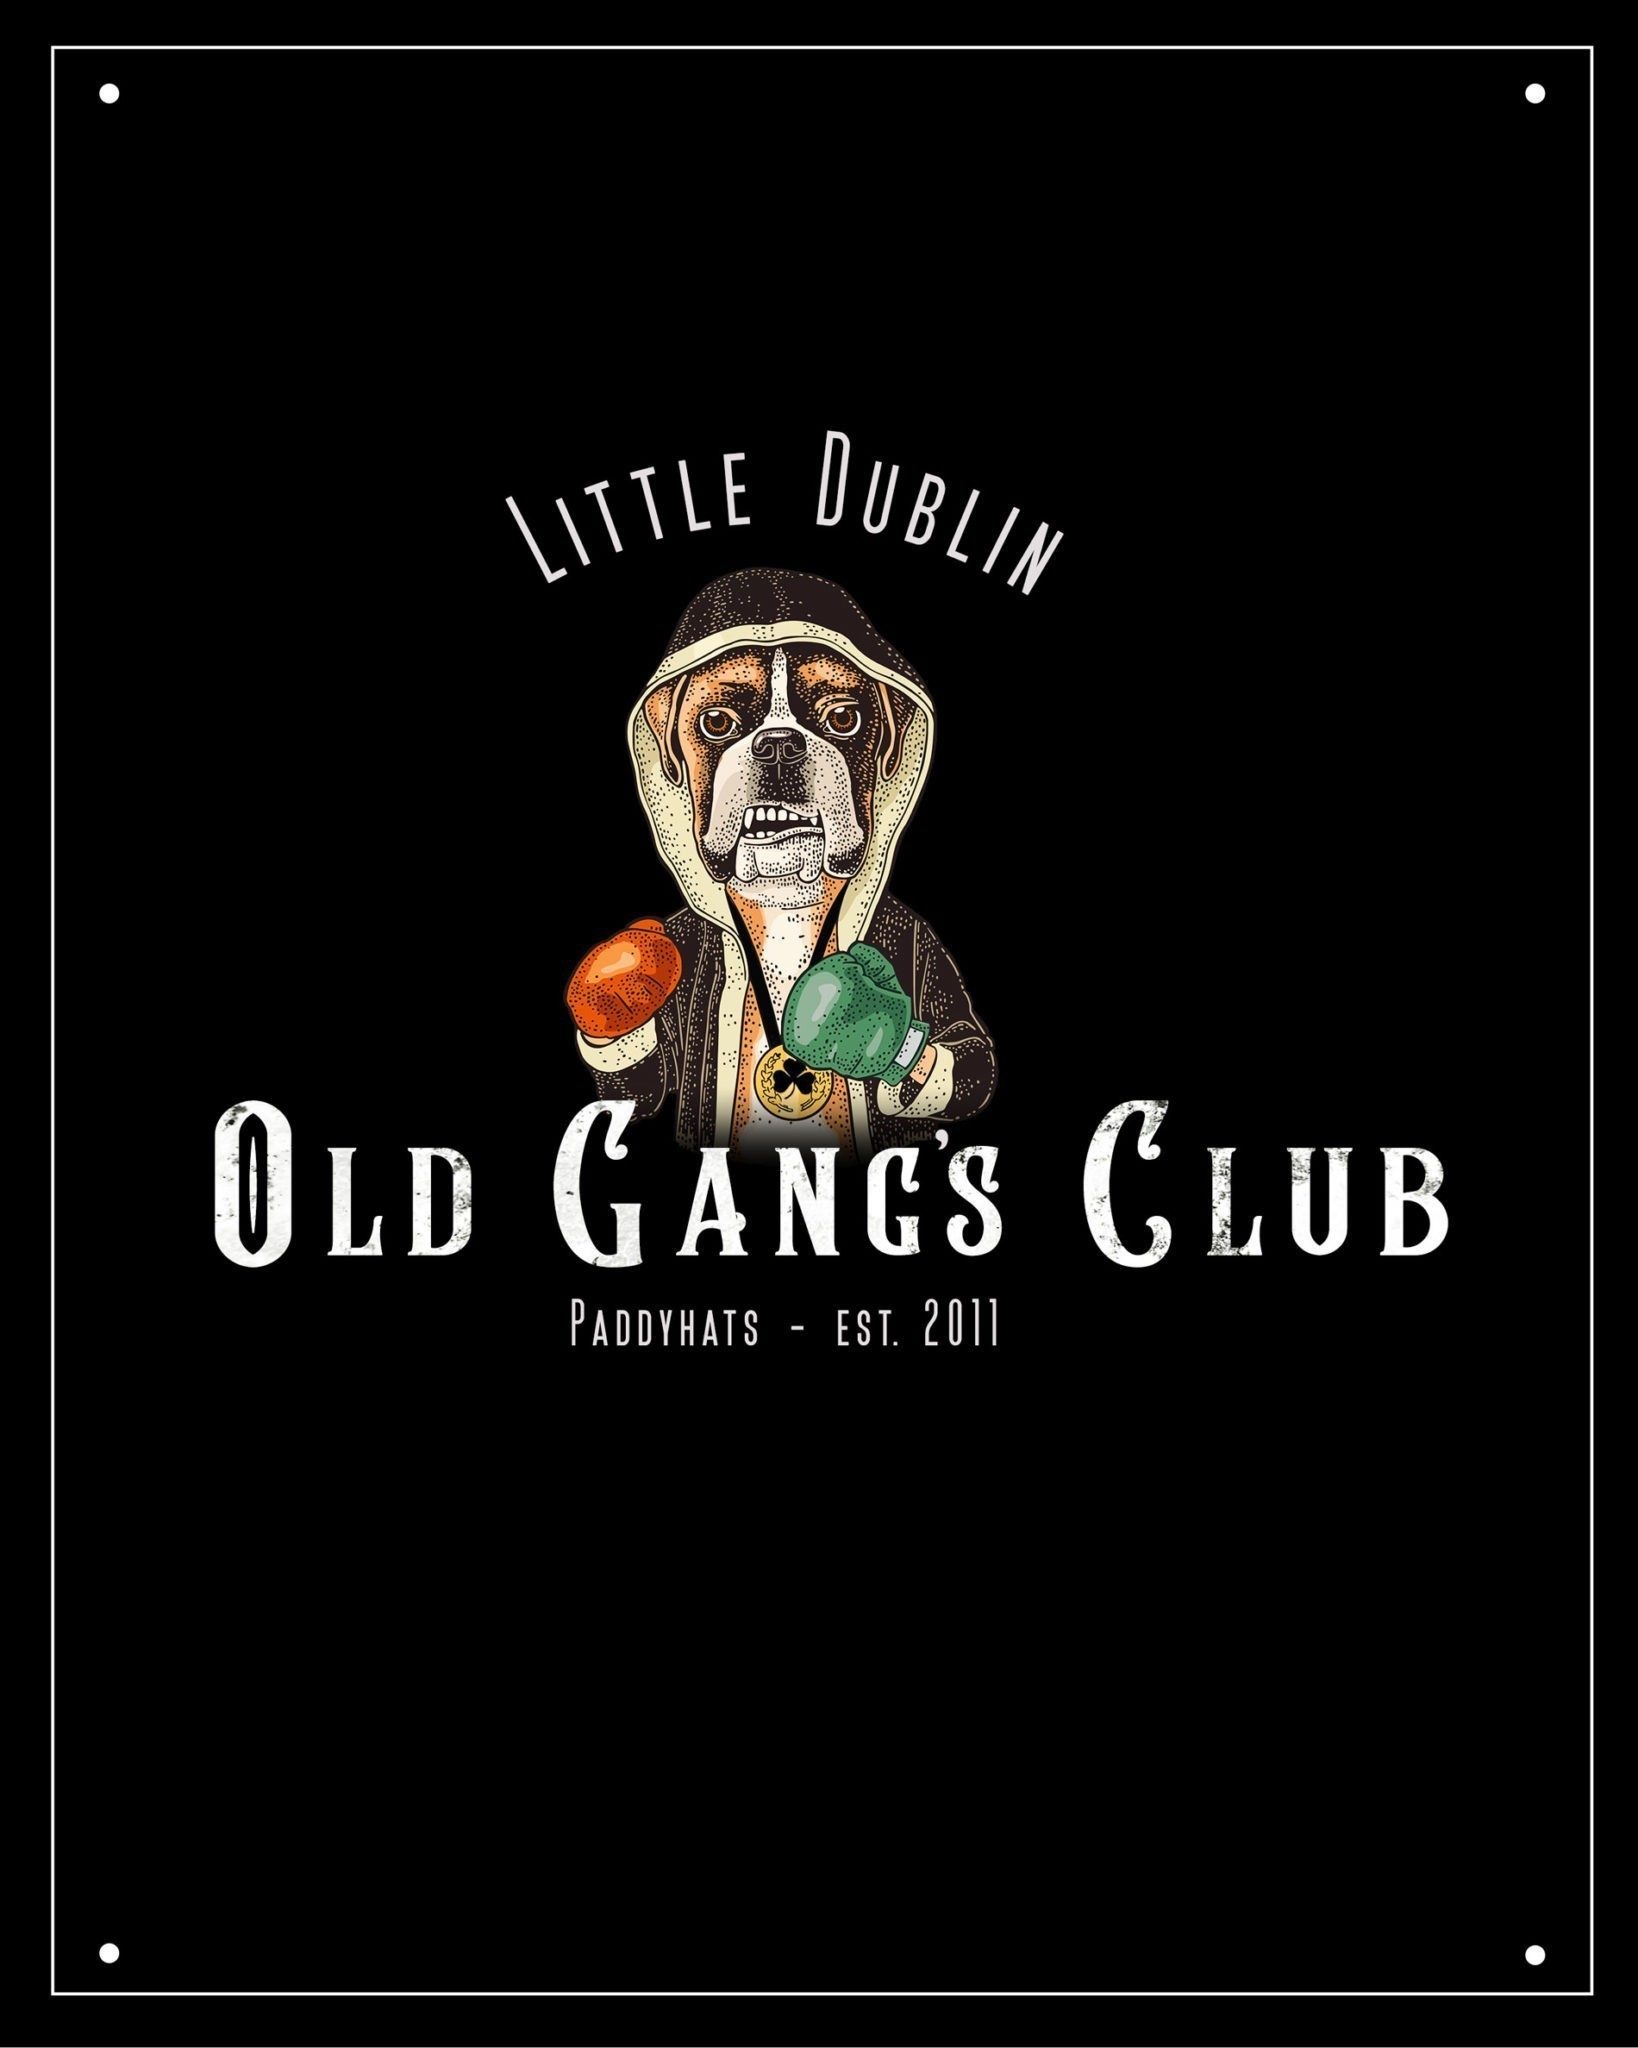 OLD GANG’S Club öffnet seine Türen